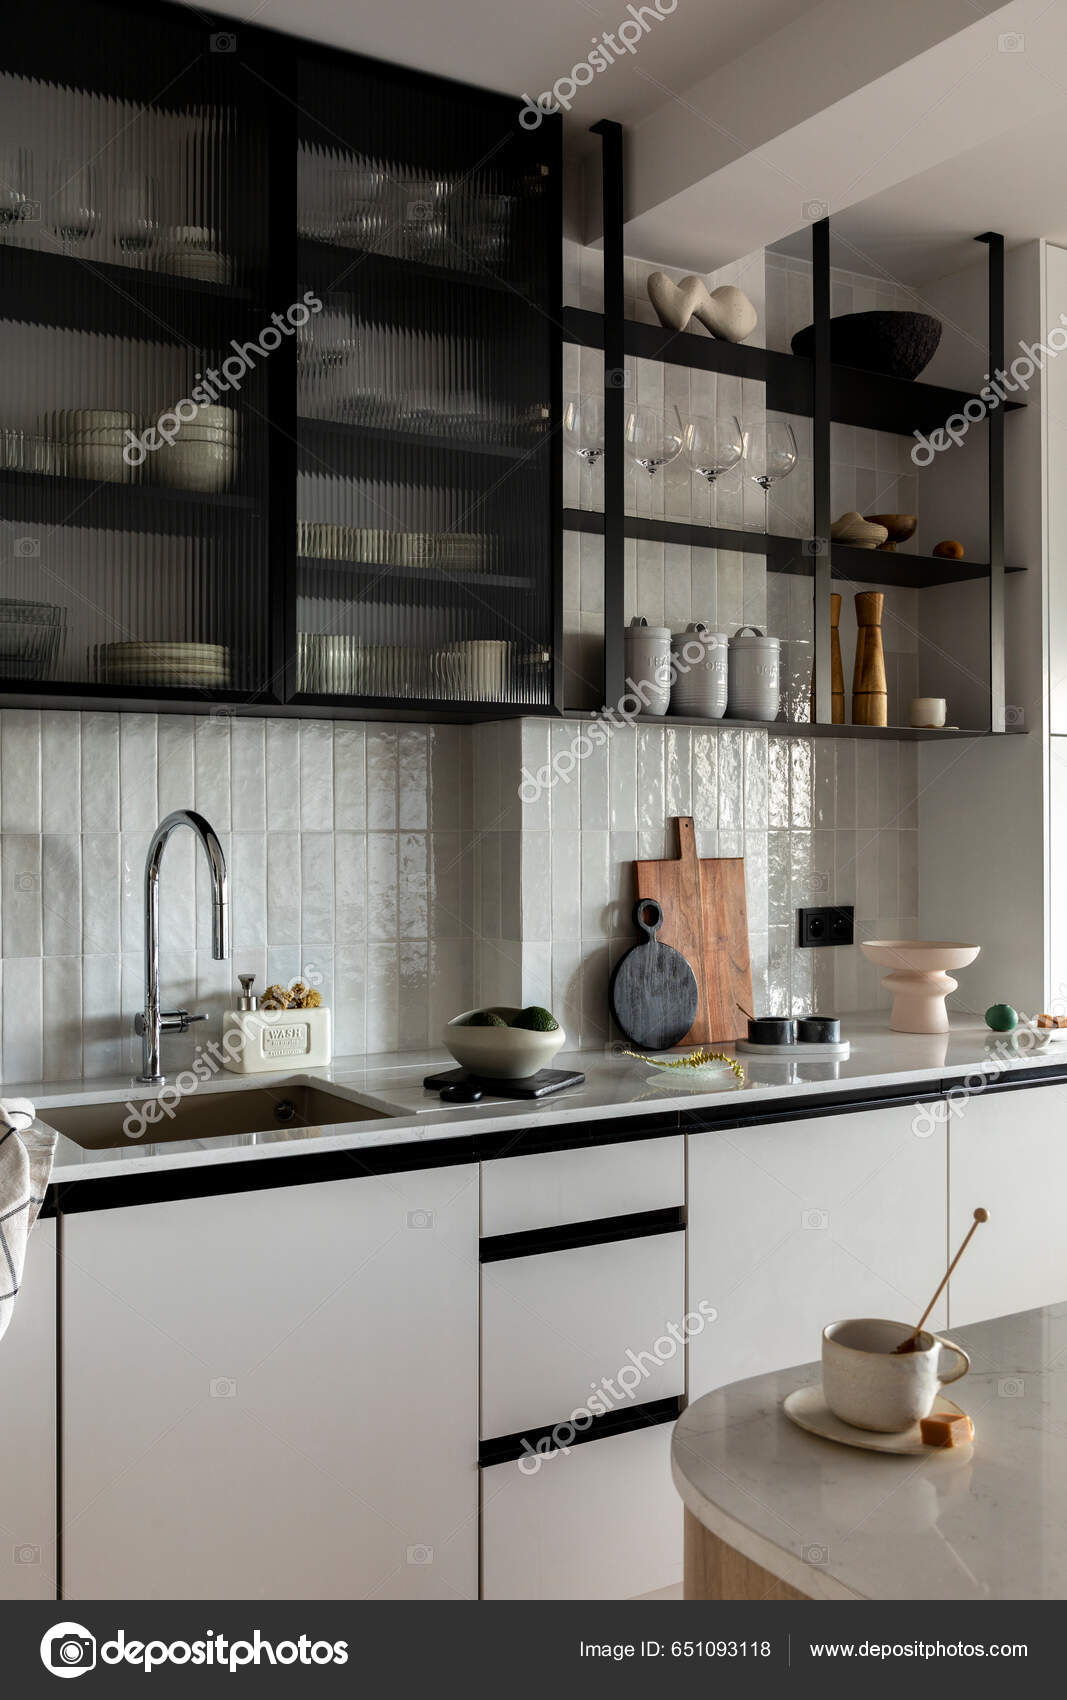 https://st5.depositphotos.com/22220764/65109/i/1600/depositphotos_651093118-stock-photo-creative-interior-design-kitchen-space.jpg